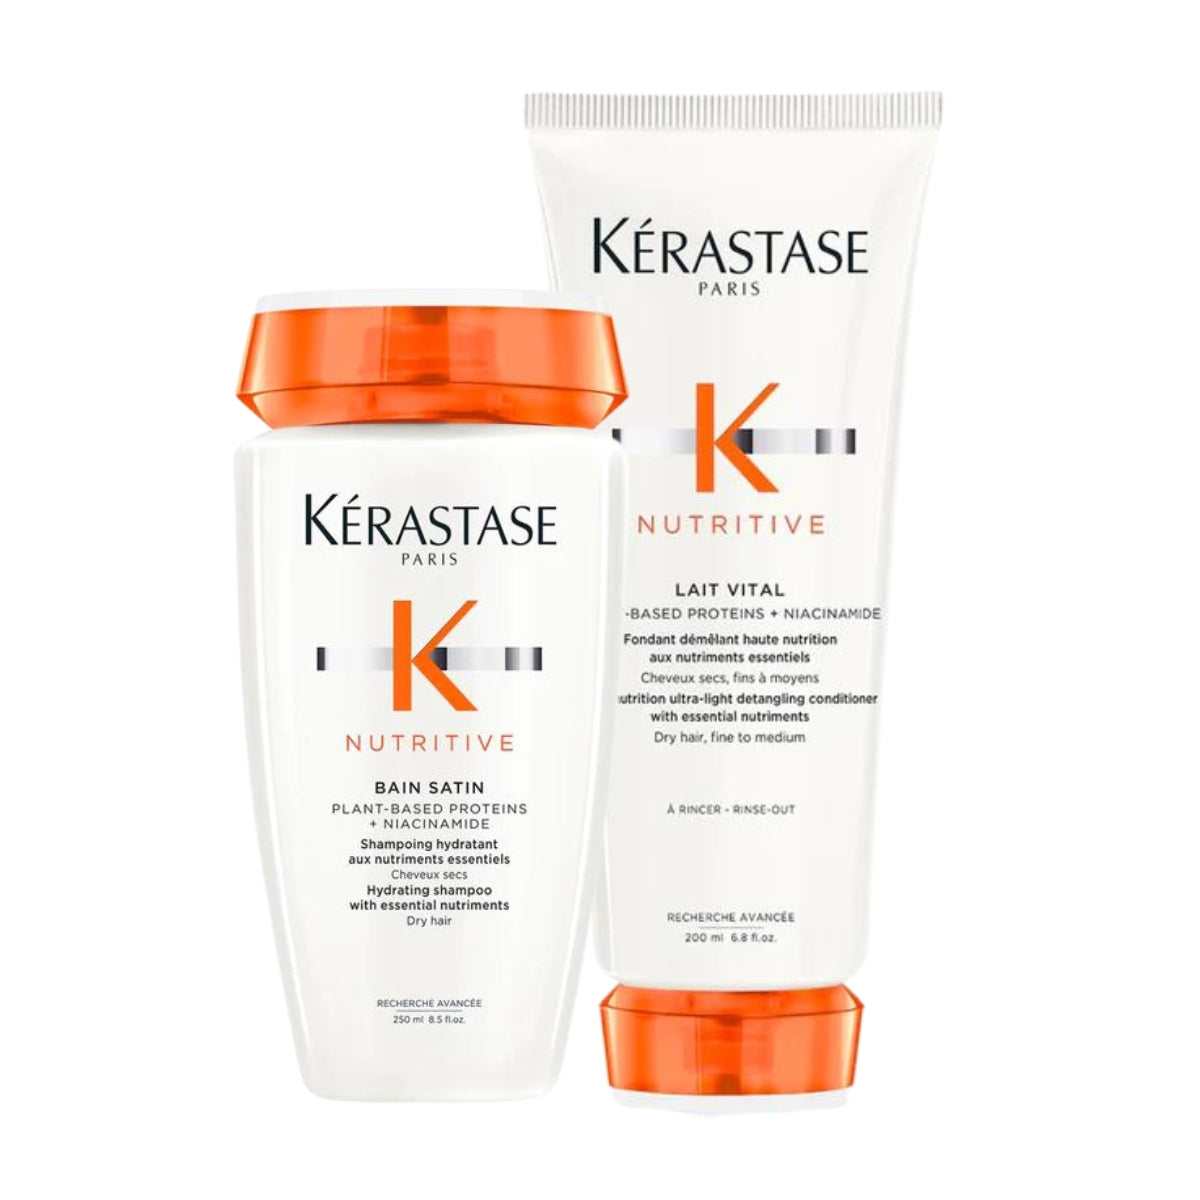 Kérastase Nutritive Duo for Dry Hair SAVE 15%